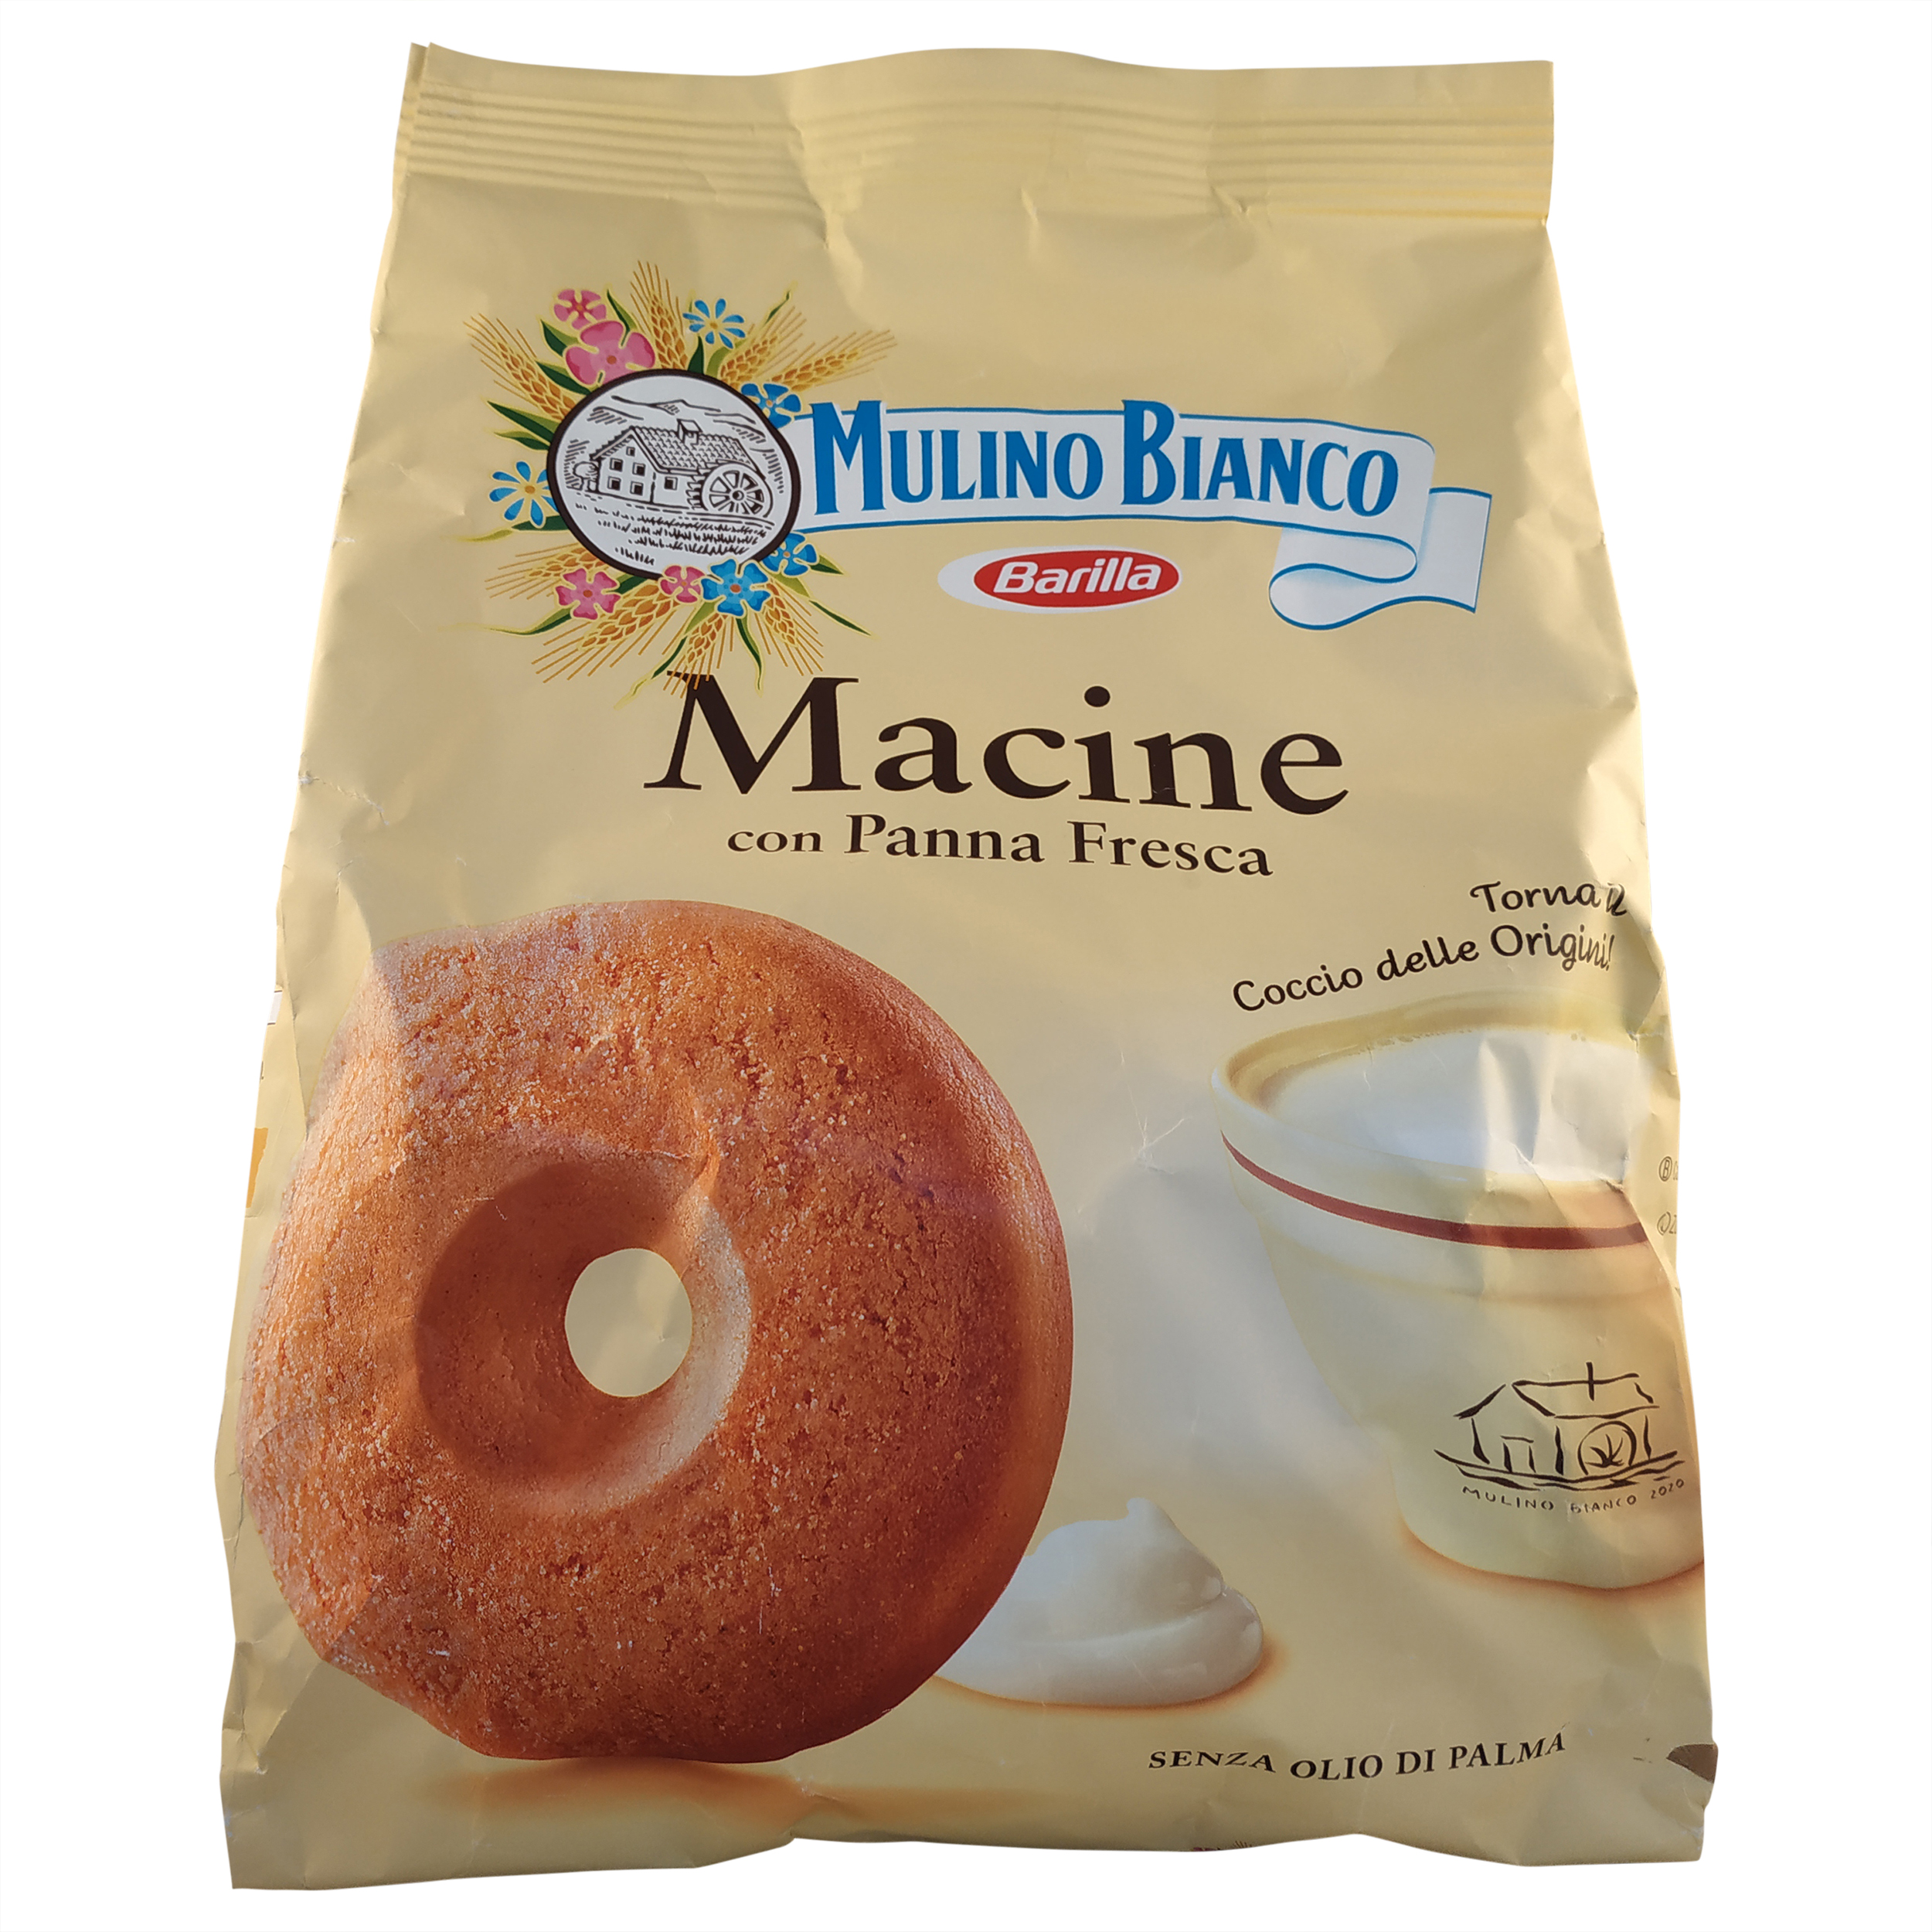 Mulino Bianco, Italian Cookies, Mulino Bianco, Macine, Italian Snacks